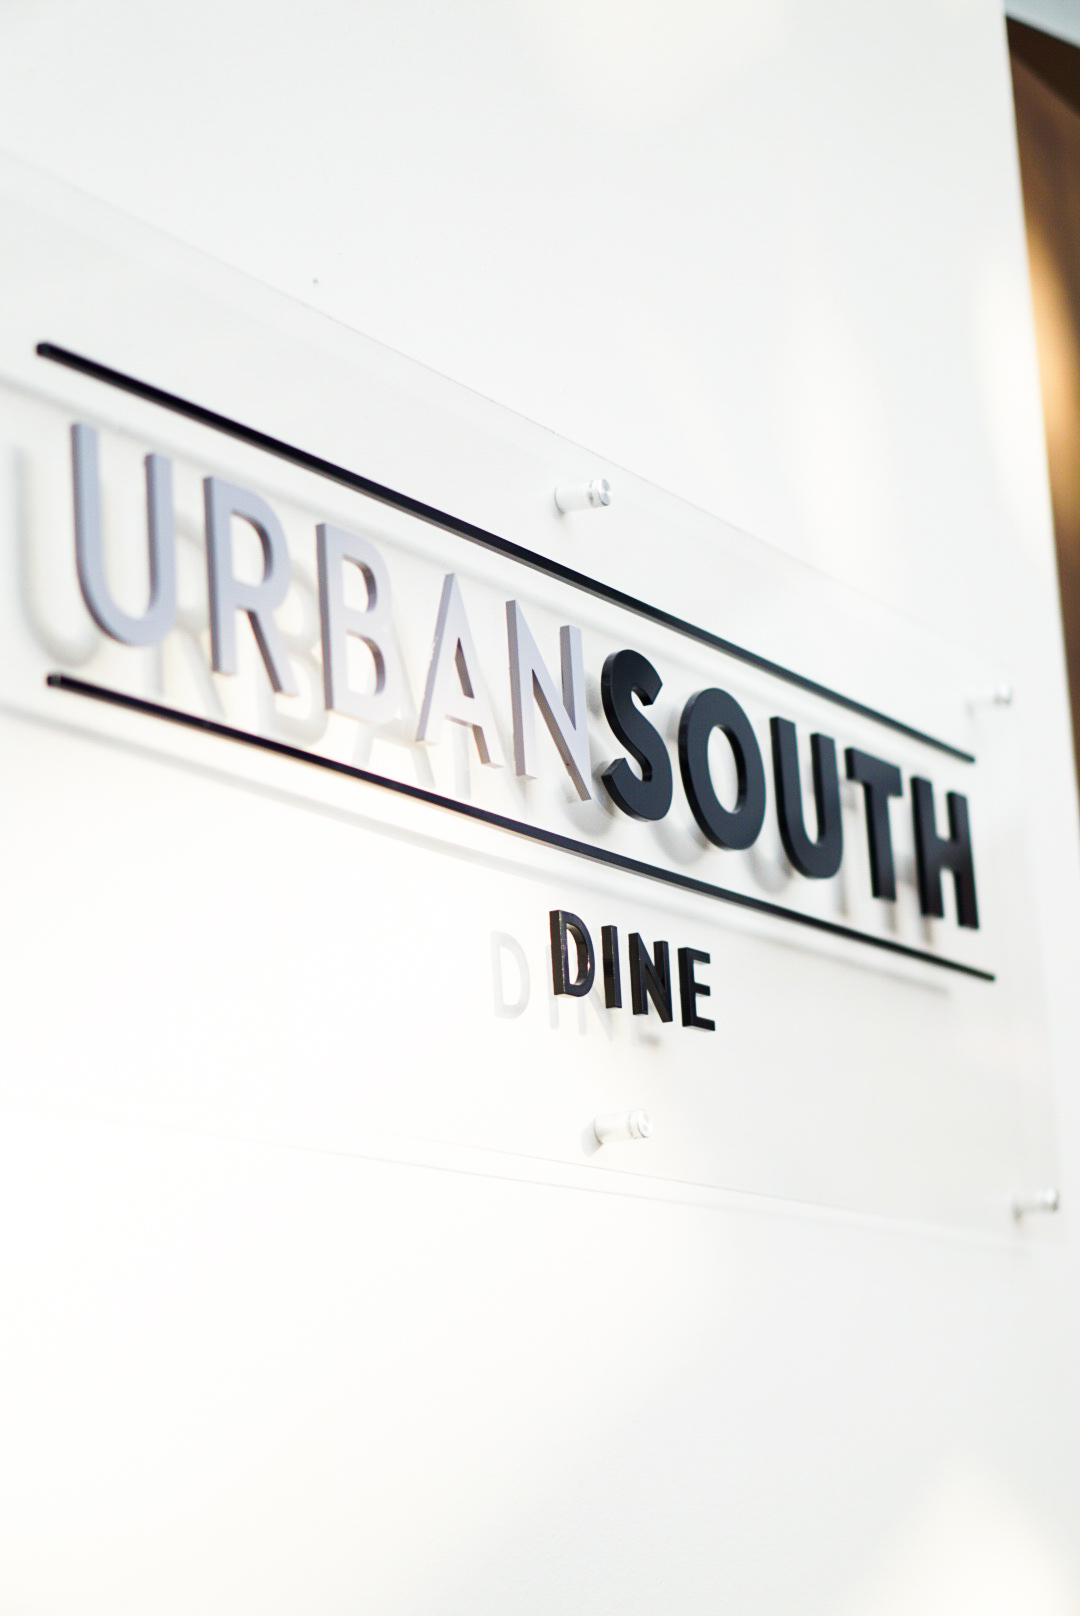 Urban South Dine